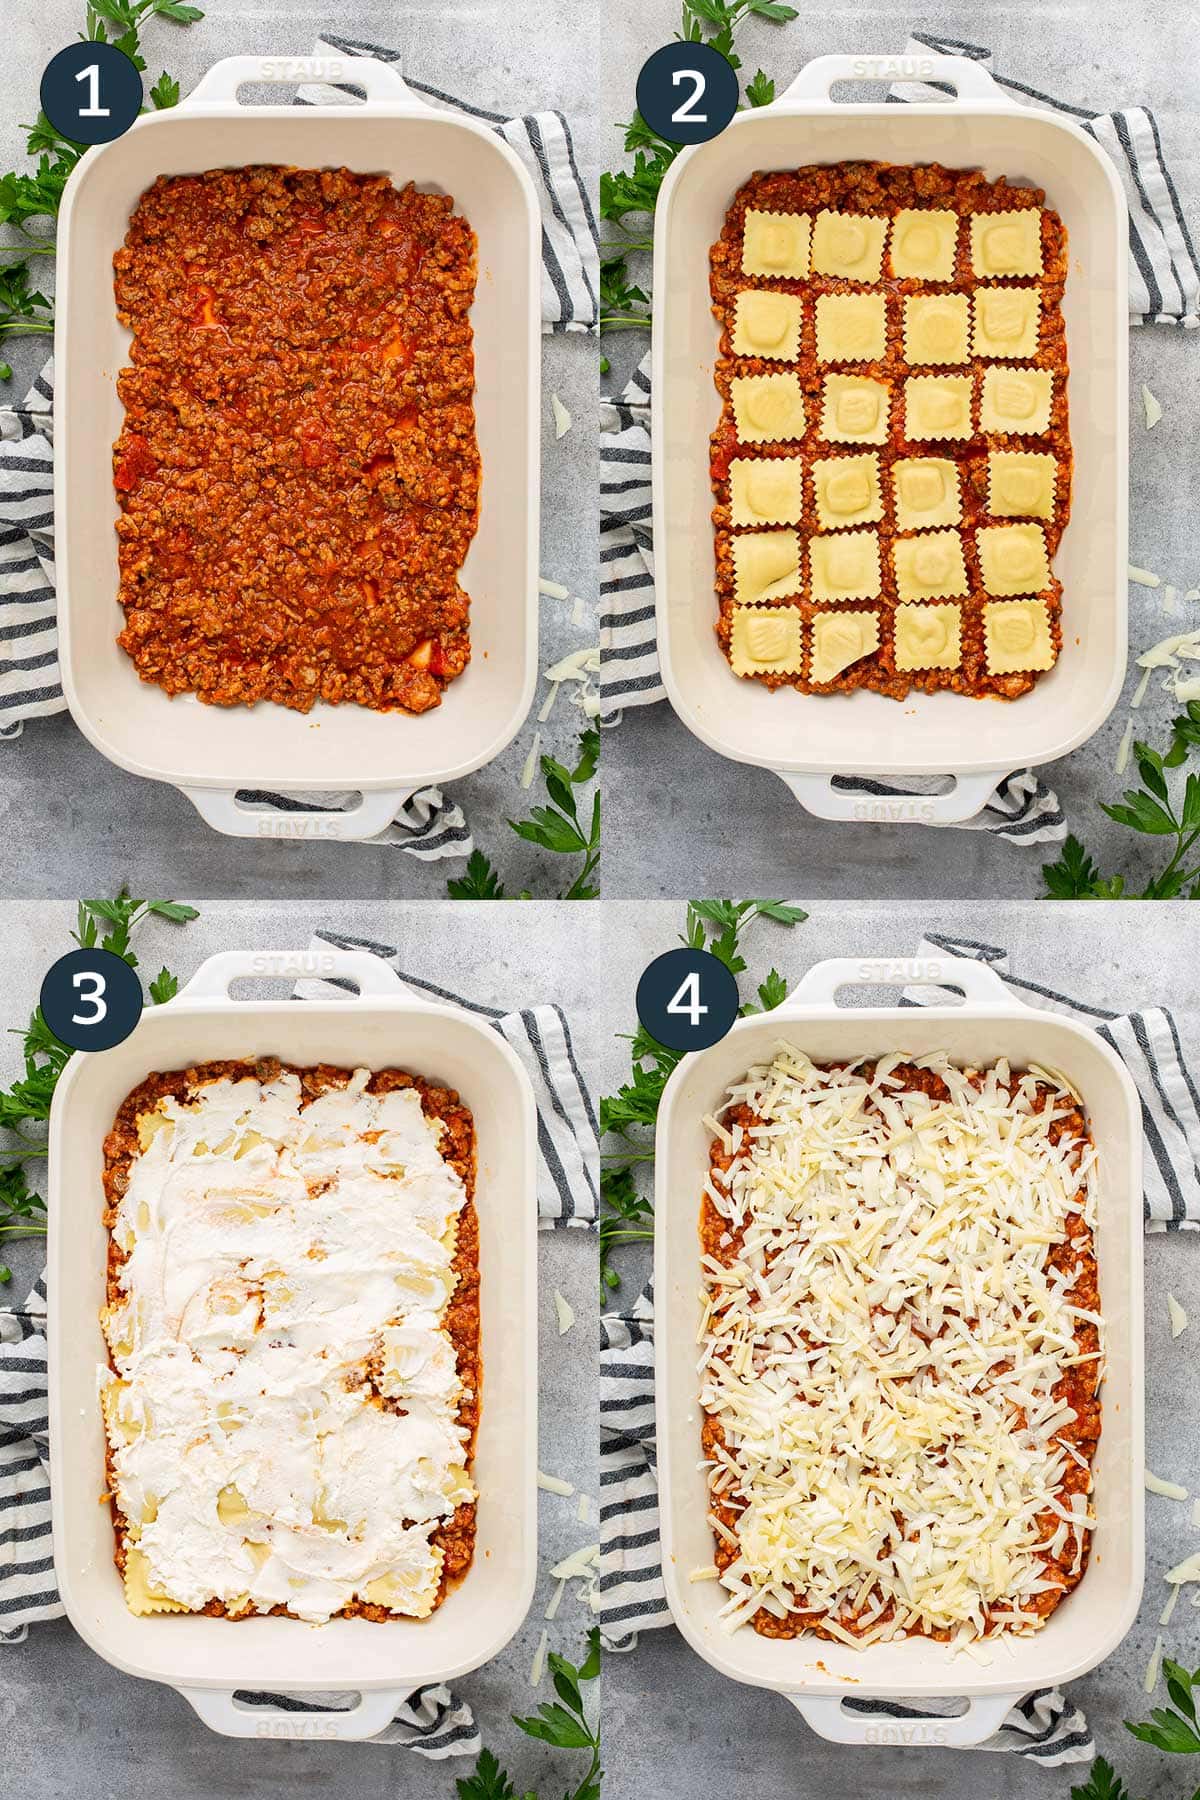 Four preparation shots of ravioli lasagna bake layers in a white 9x13 casserole dish.